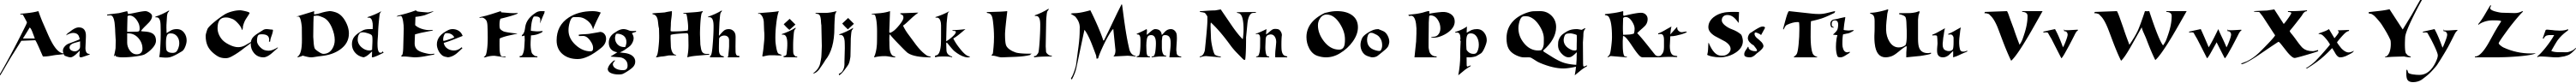 Пример написания английского алфавита шрифтом Allencon Demo